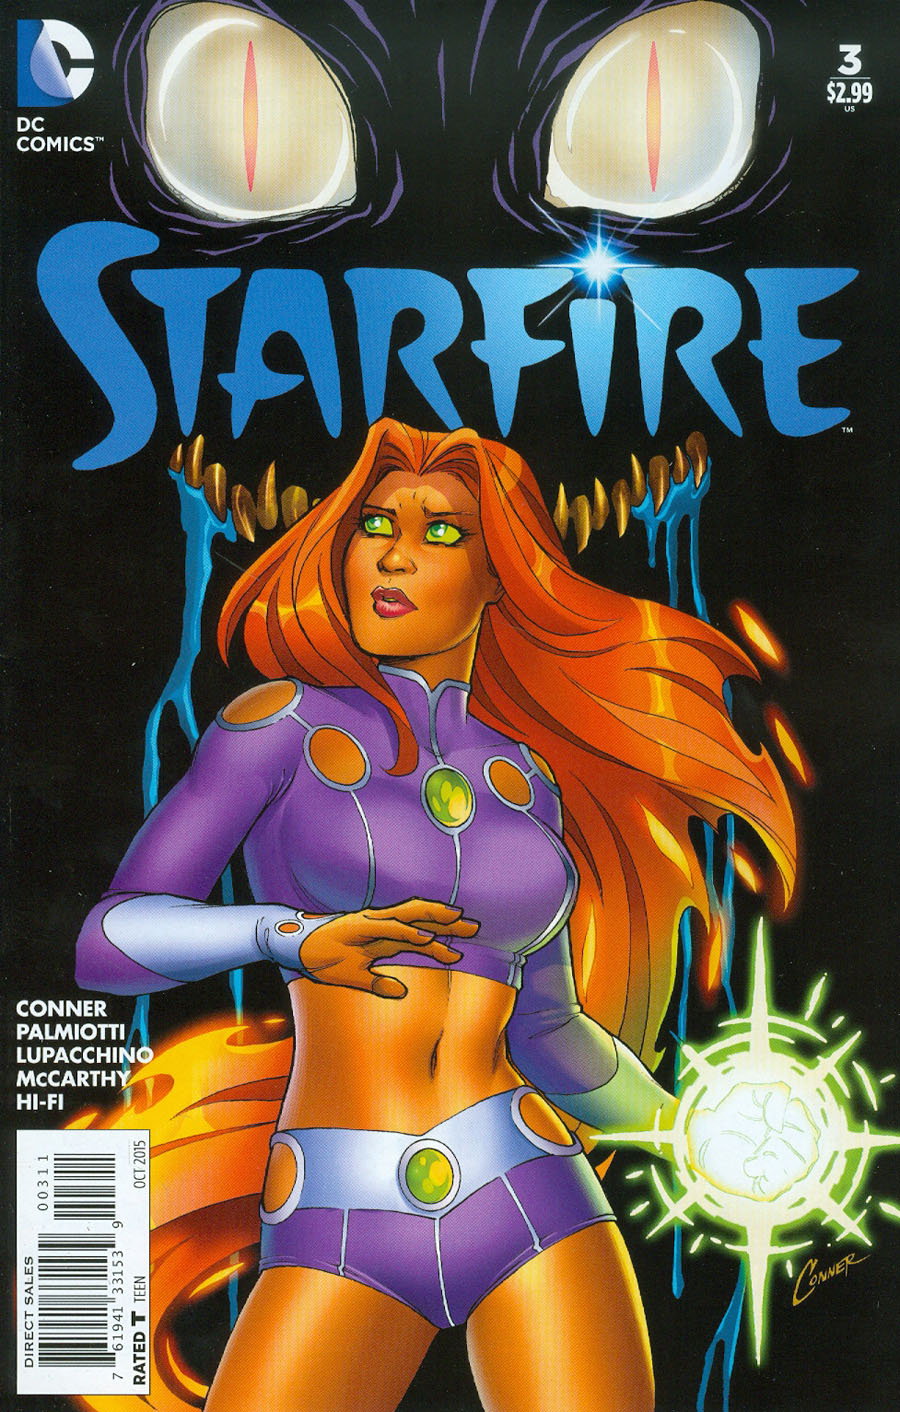 Starfire Vol 2 #3 Cover A Regular Amanda Conner Cover